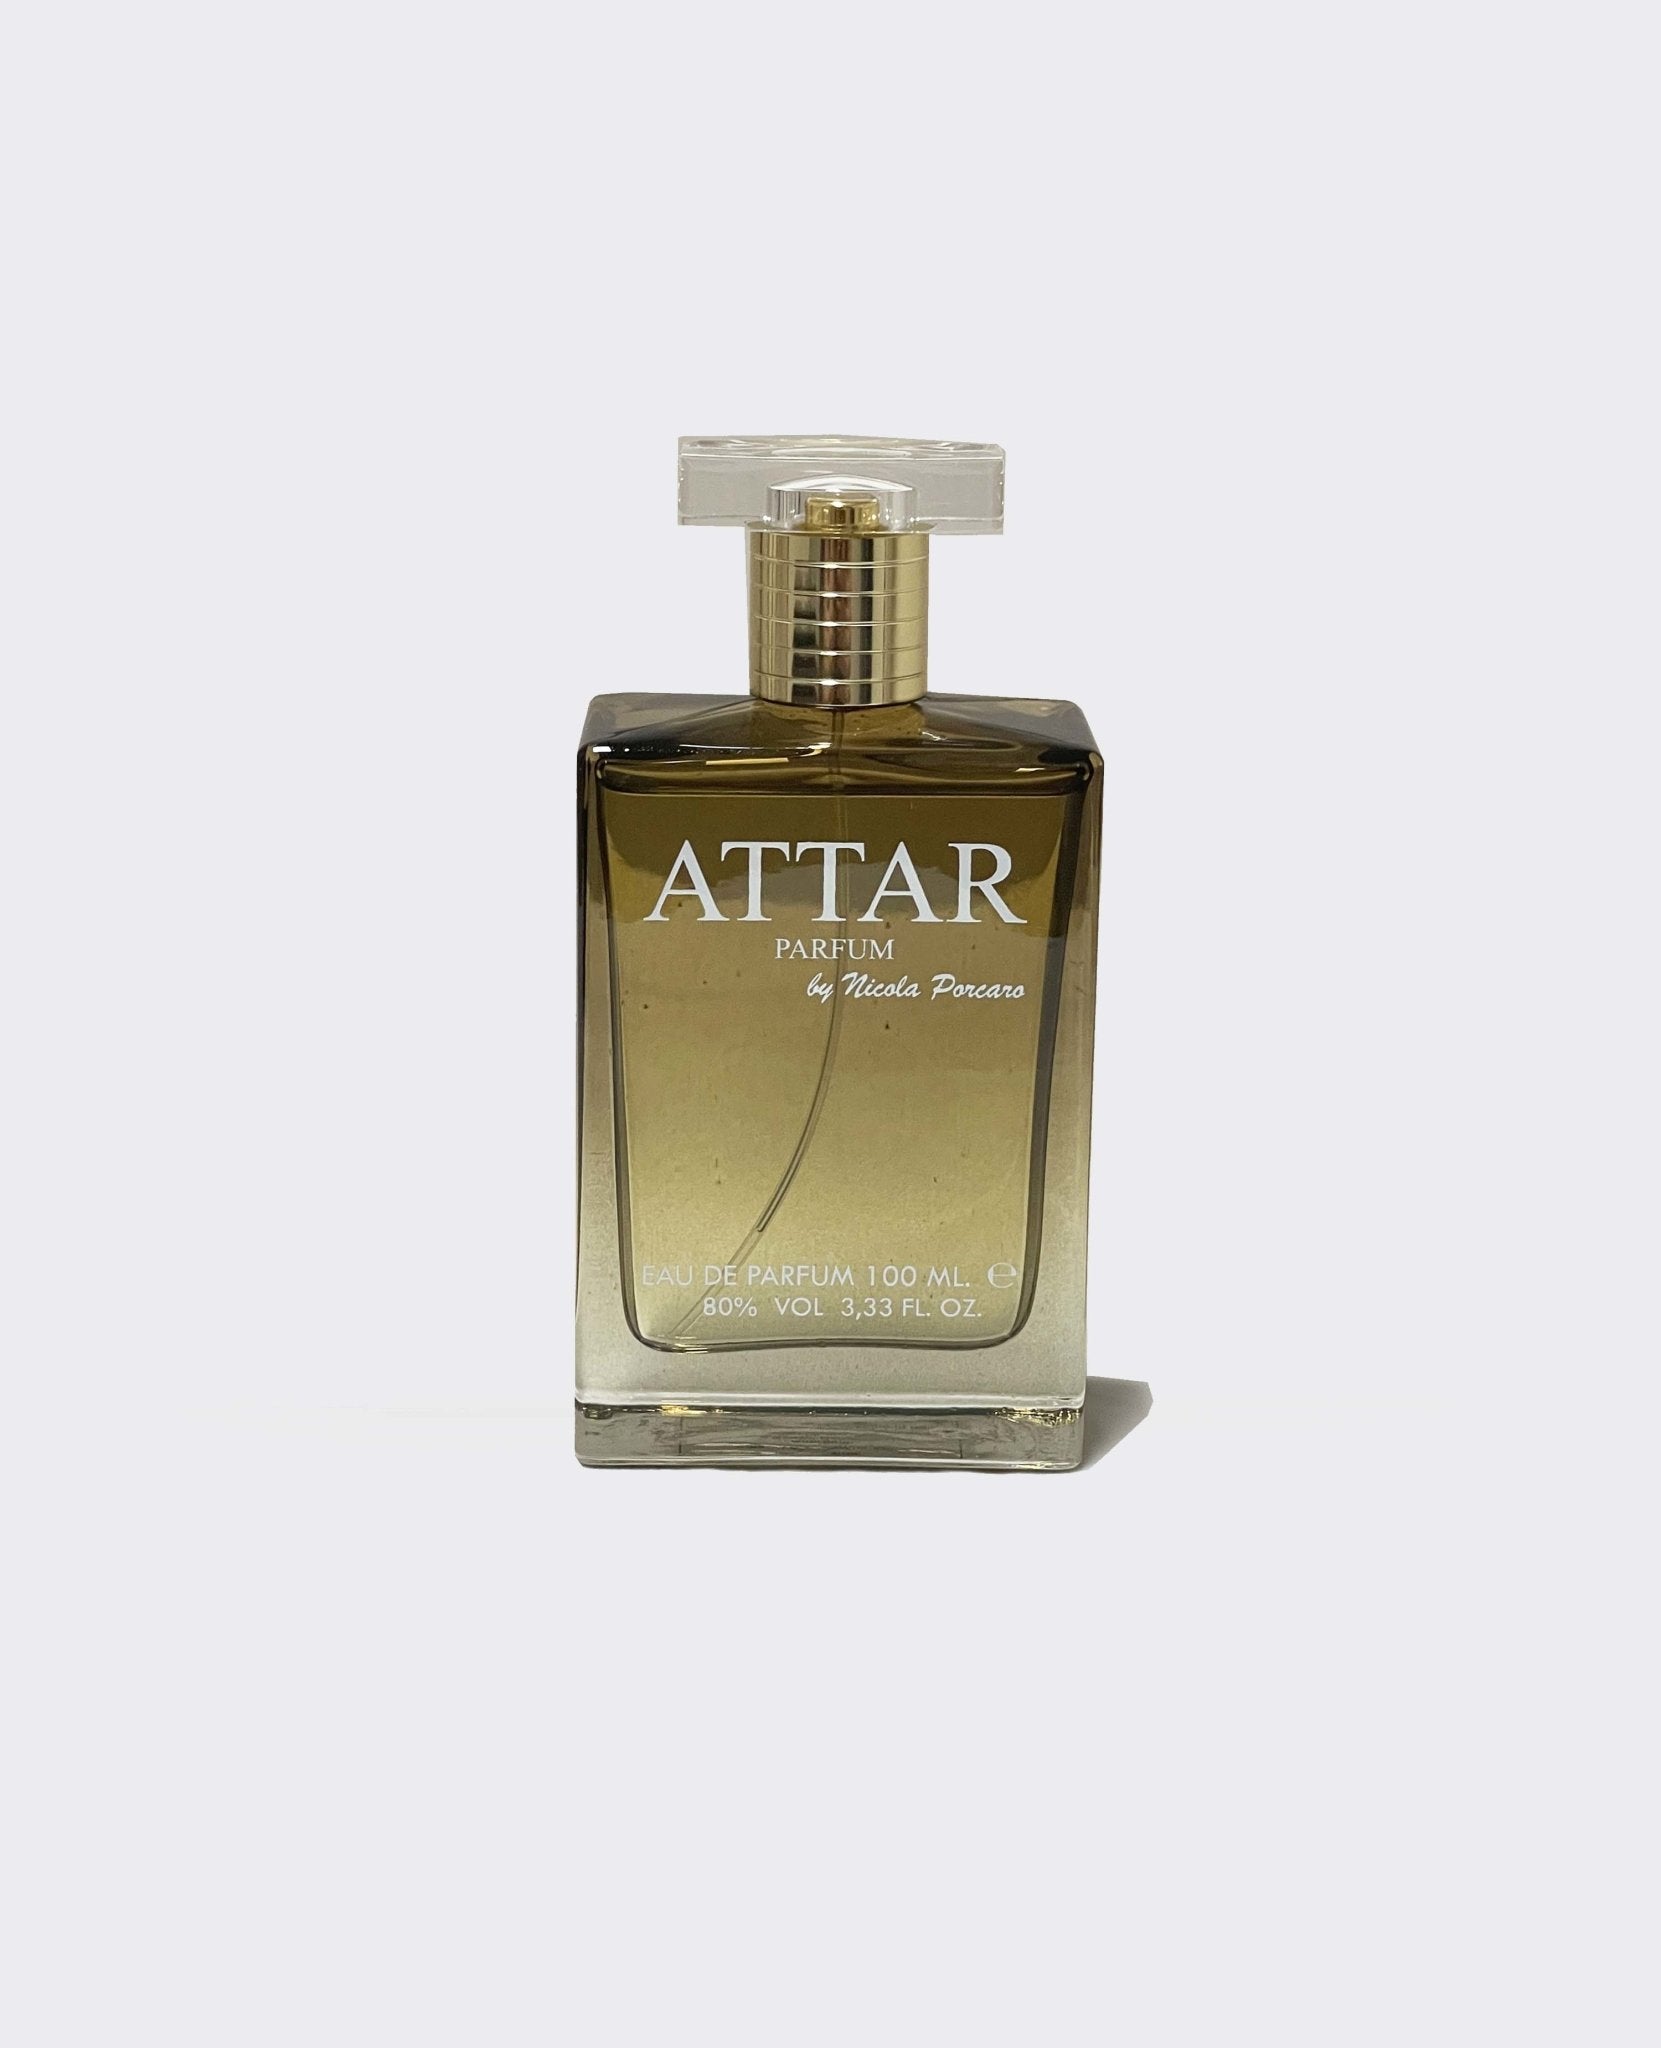 ATTAR Parfum - Crush Store Srls